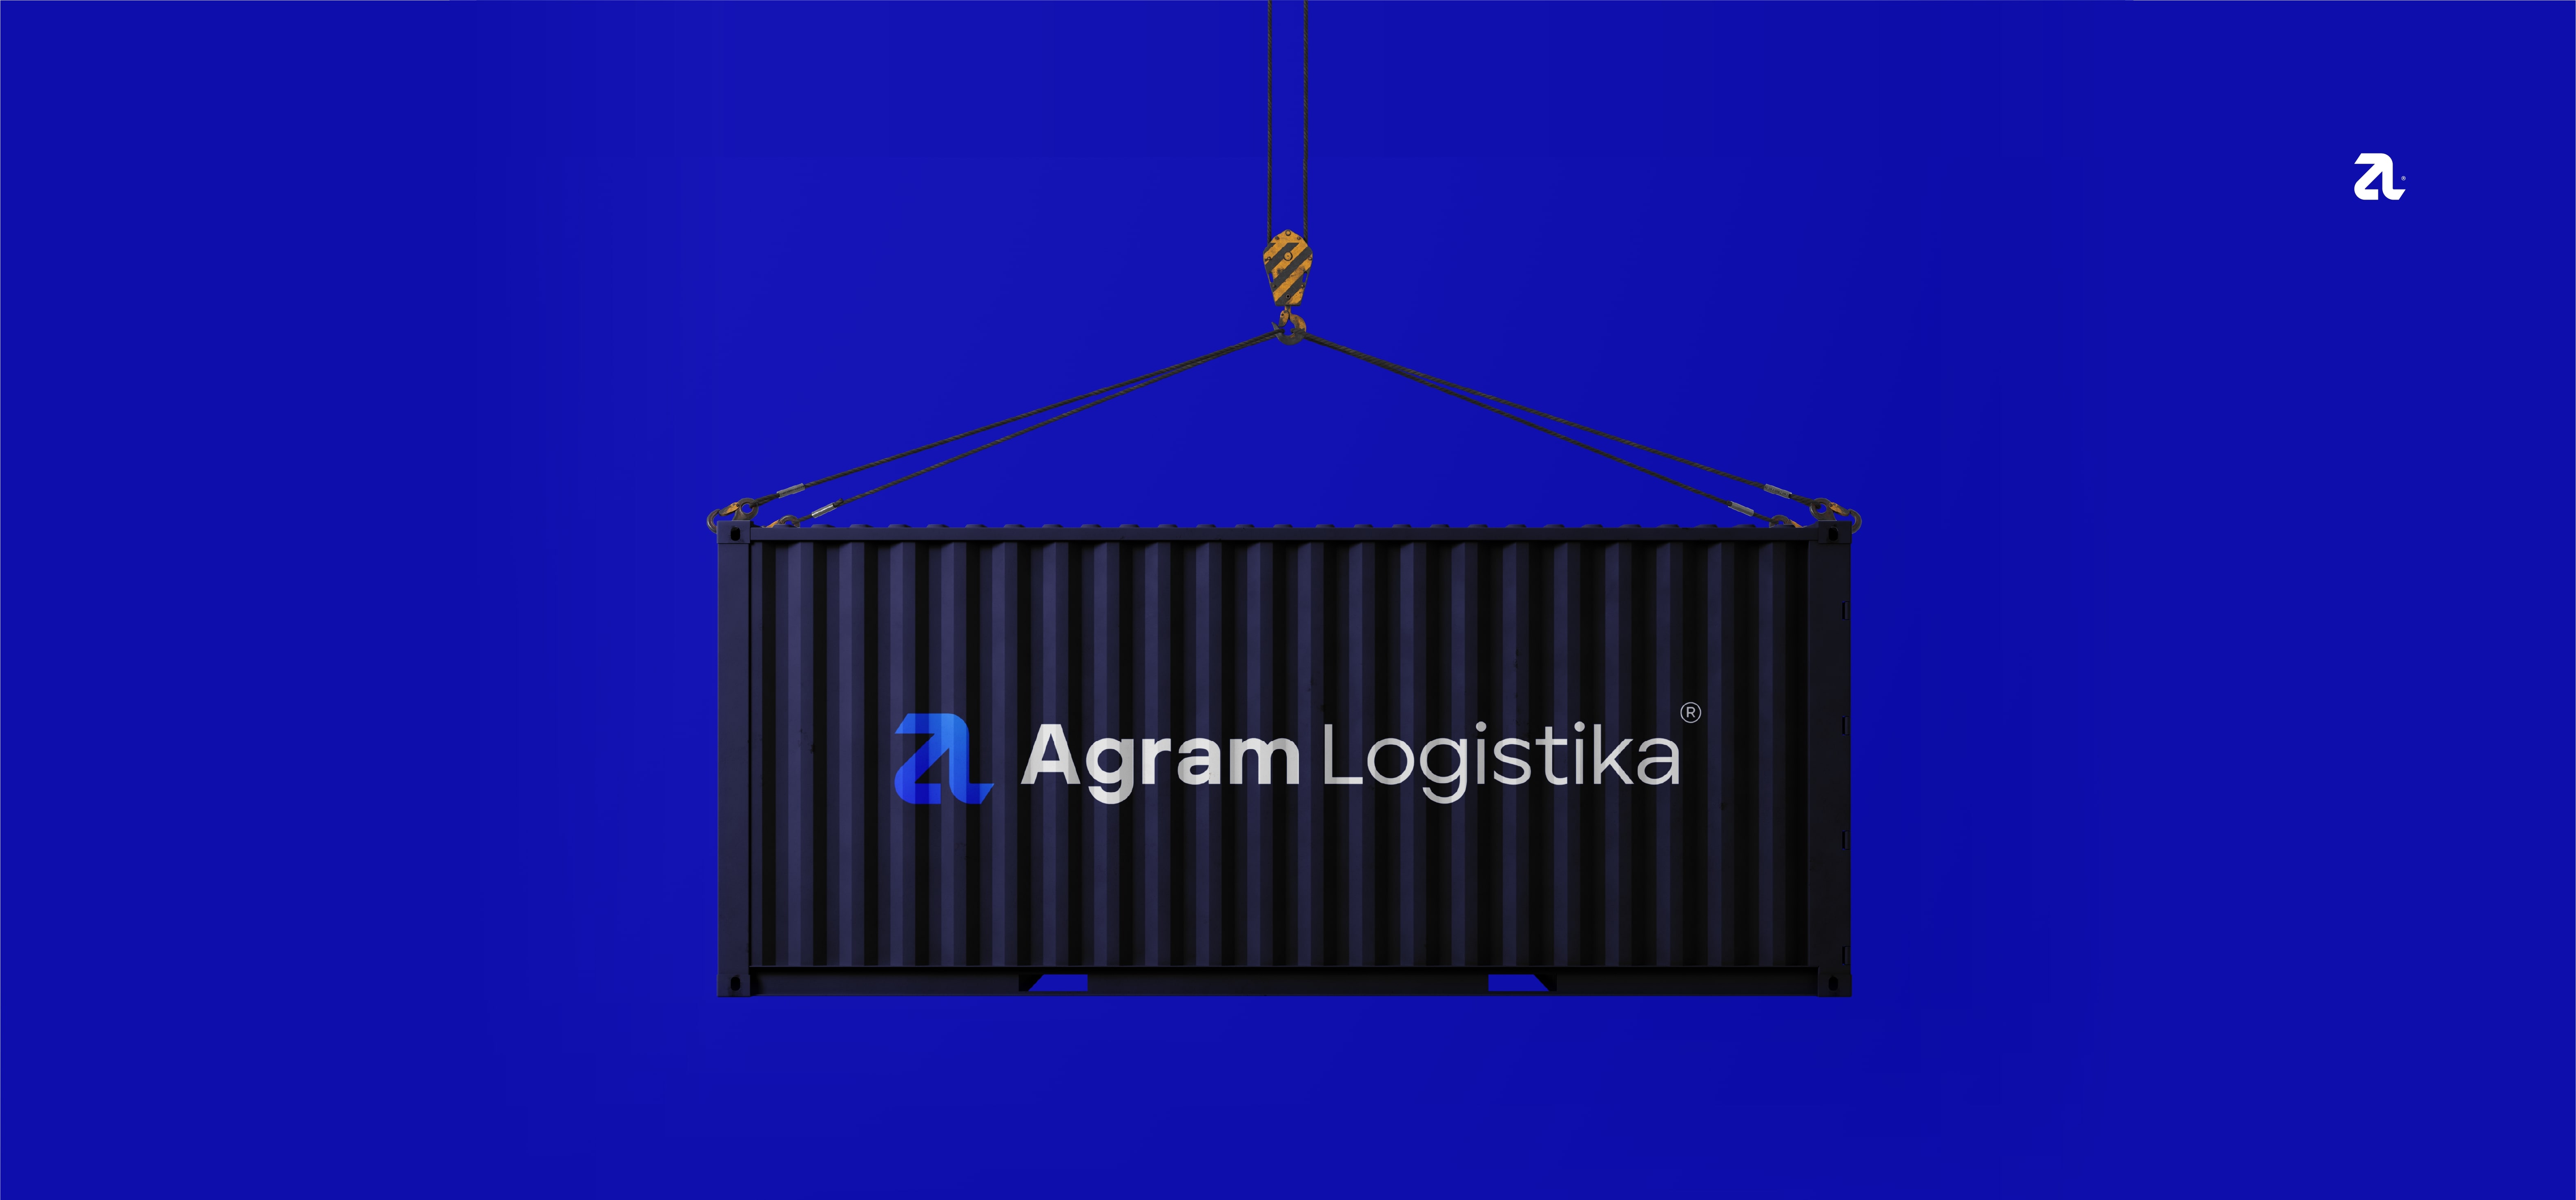 Agram Logistika Brand Identity